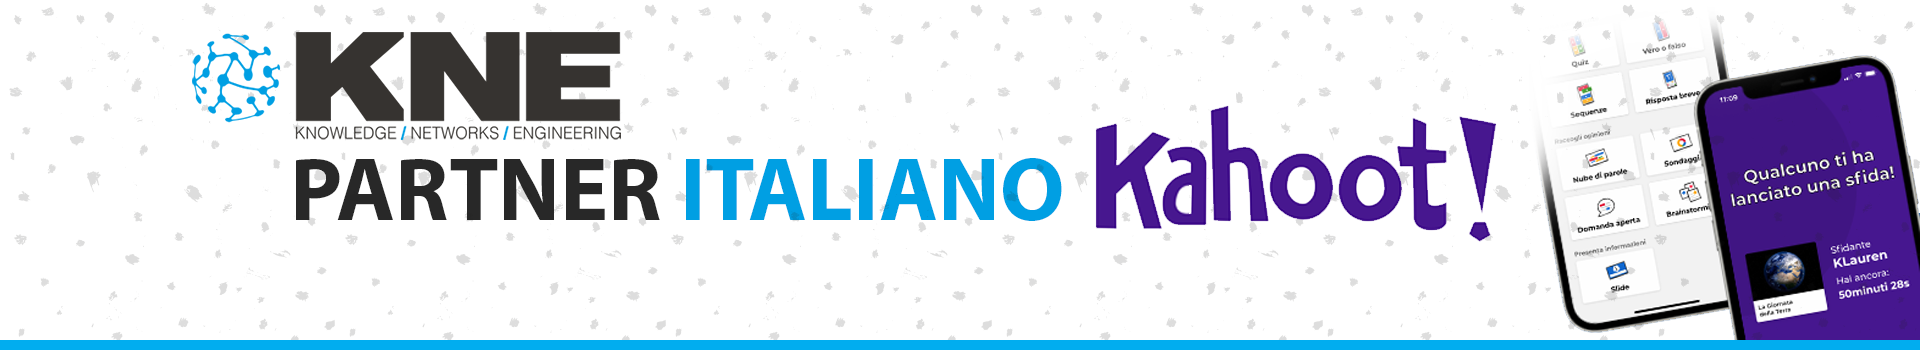 KNE è partner italiano di Kahoot!